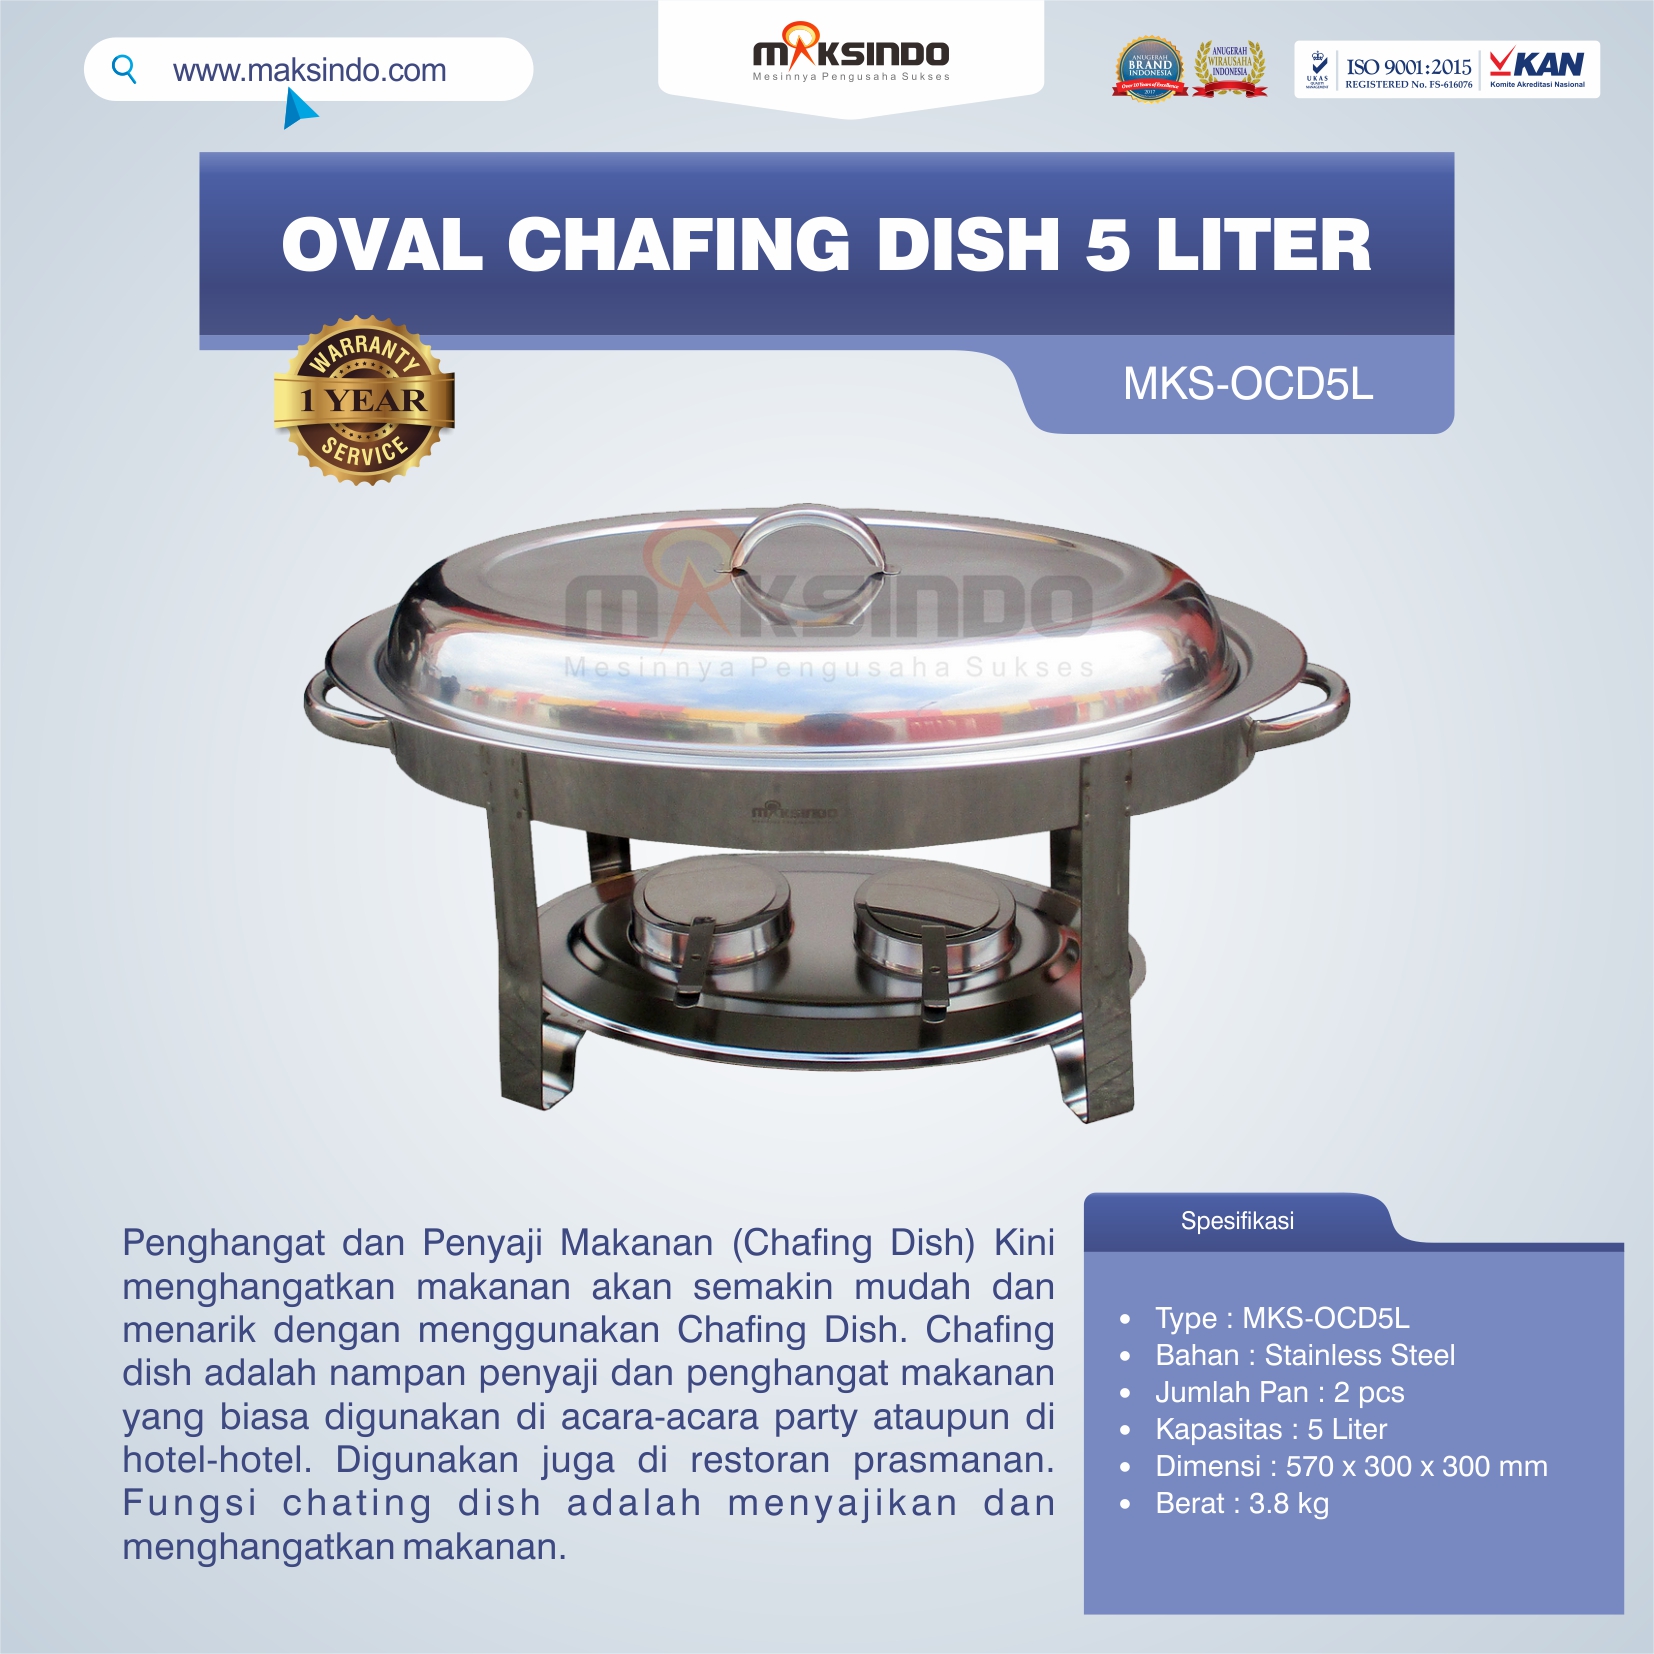 Jual Oval Chafing Dish 5 Liter di Pekanbaru